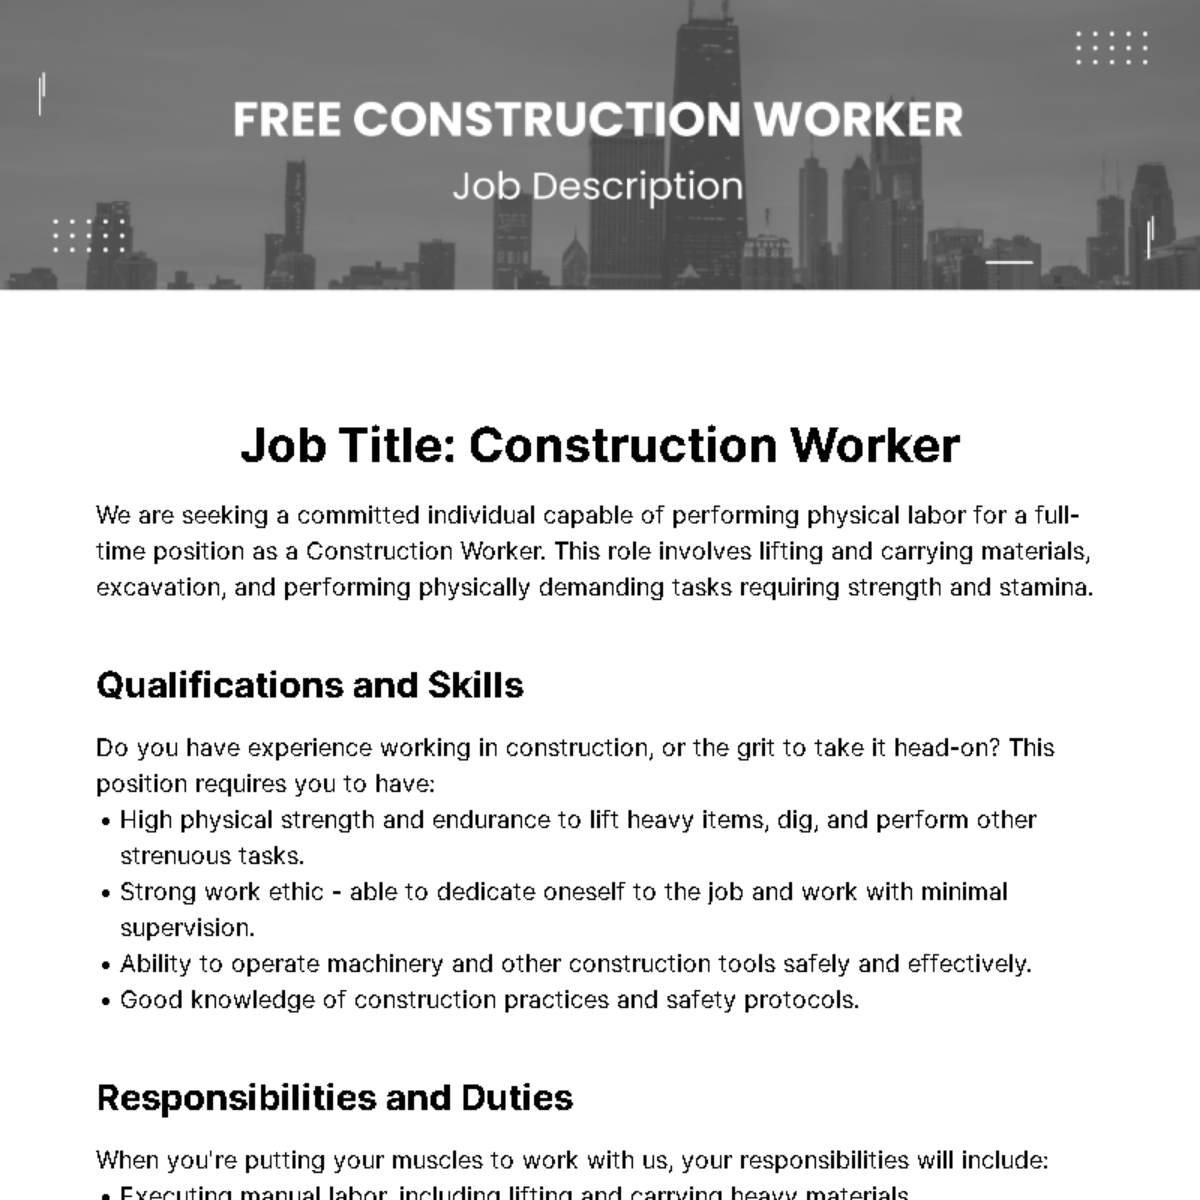 Free Construction Worker Job Description Template